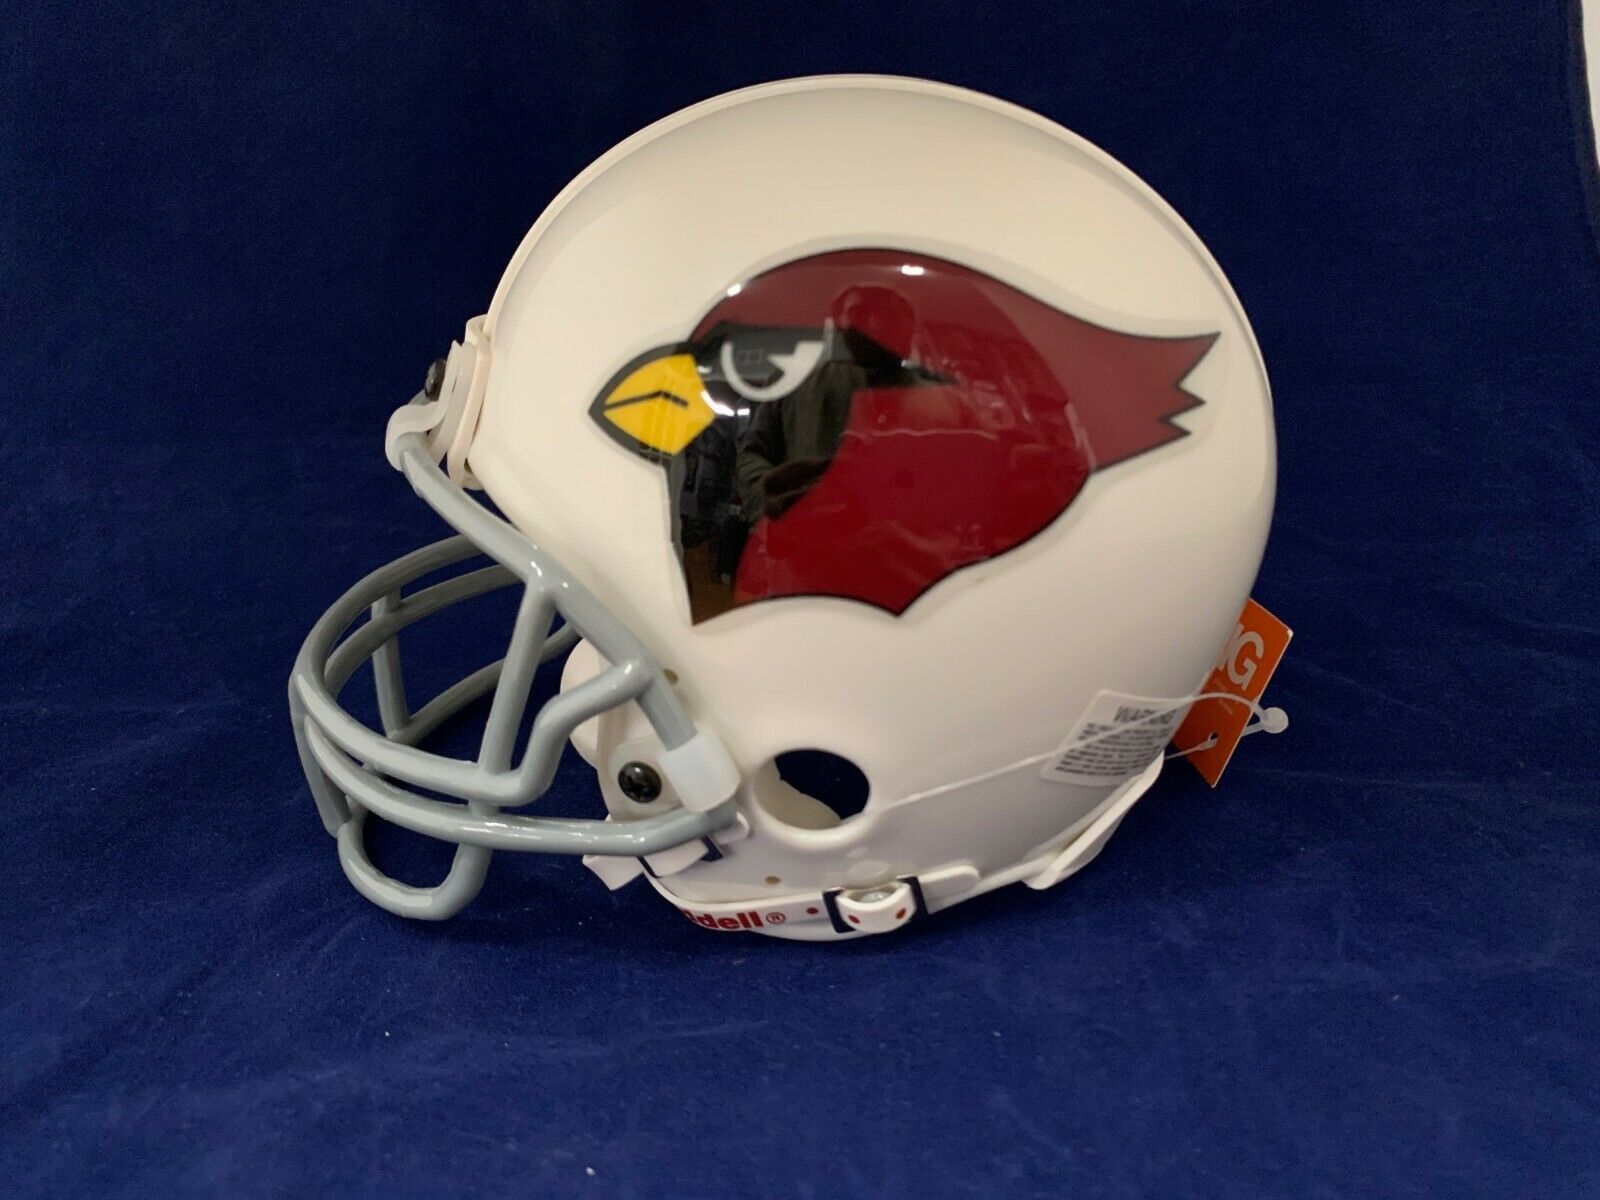 Charley Trippi Cardinals HOF 68 Signed Autographed Mini Helmet Light Auto/Cert.